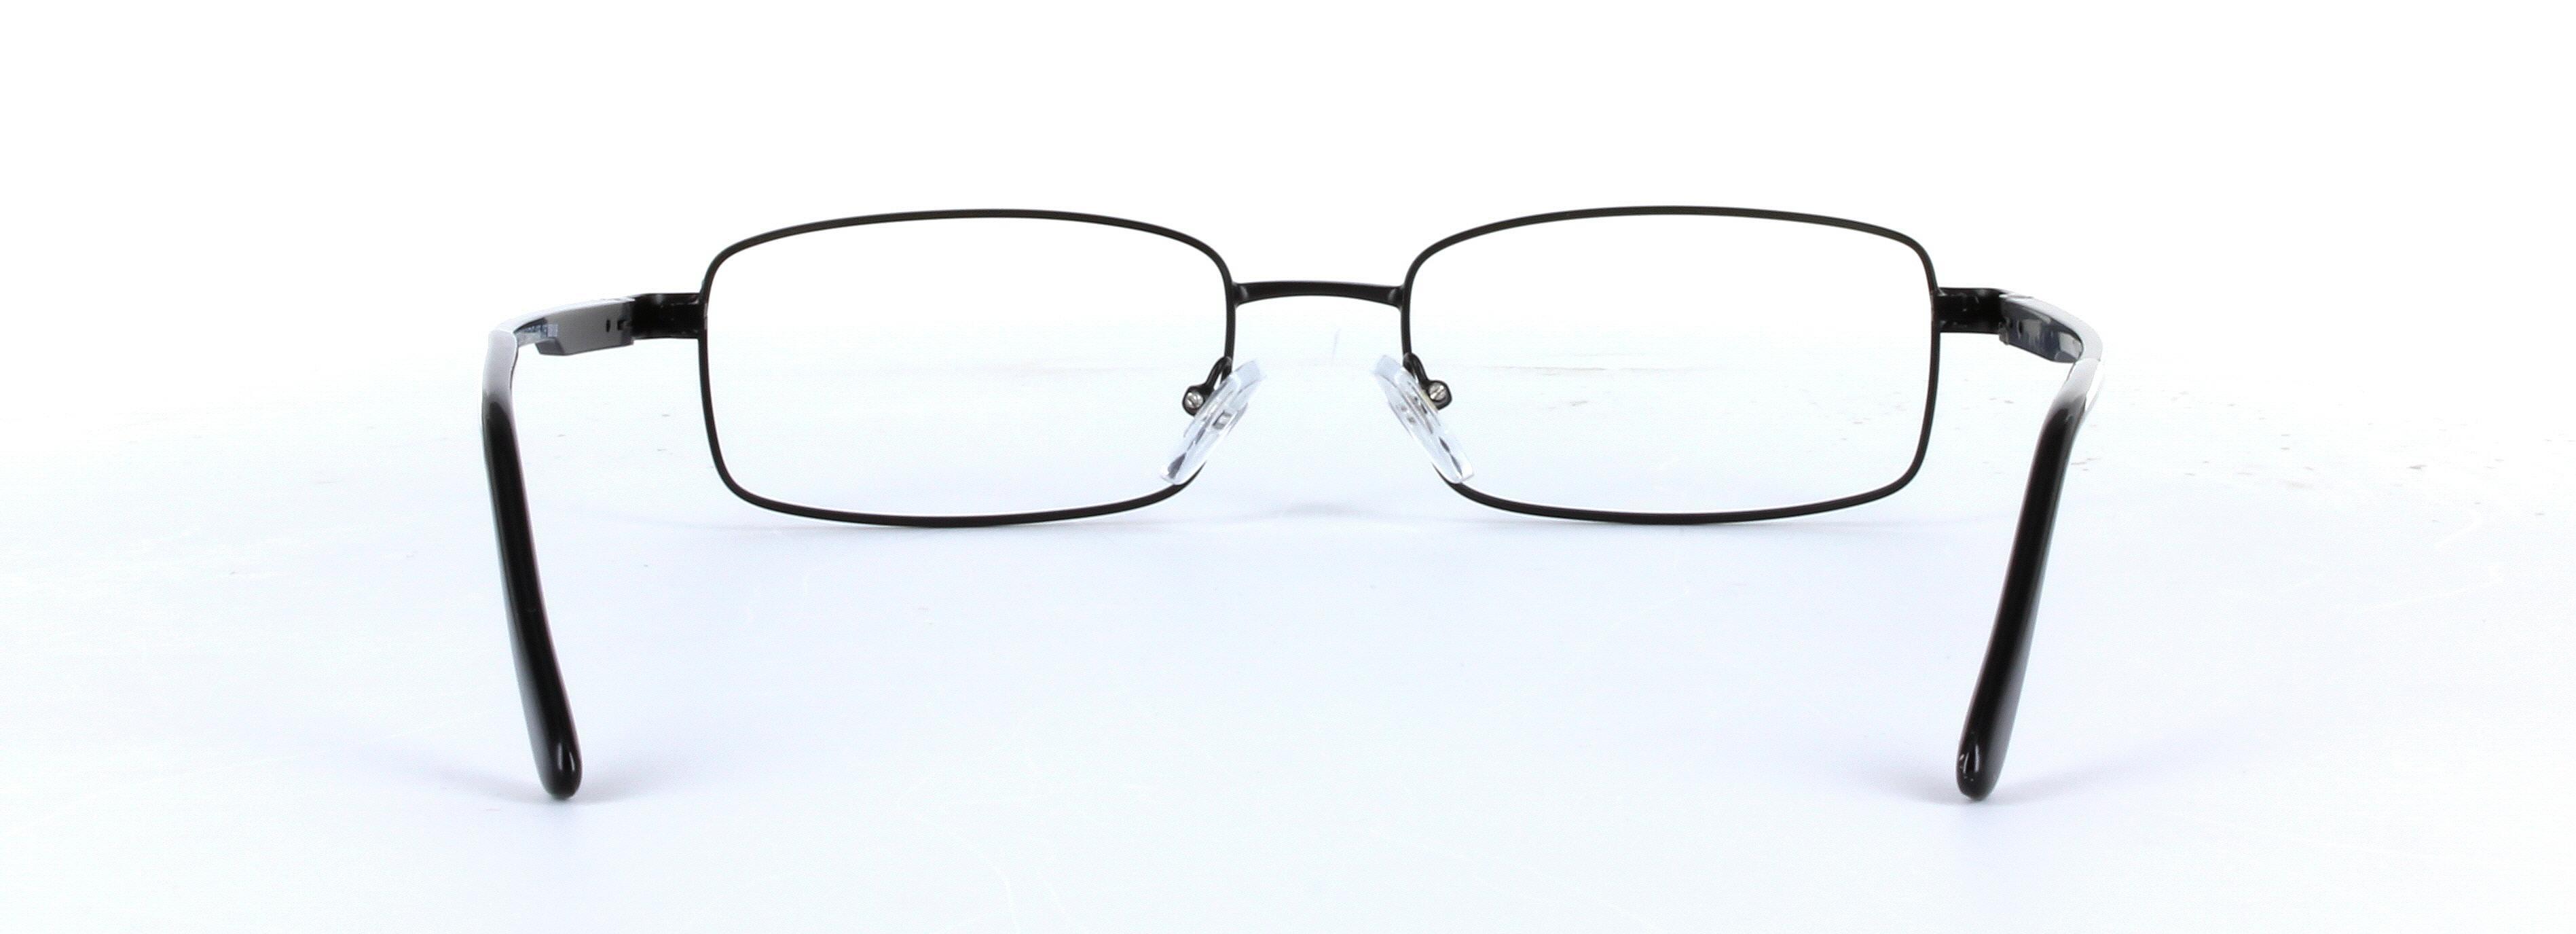 Kriston Black Full Rim Rectangular Metal Glasses - Image View 3